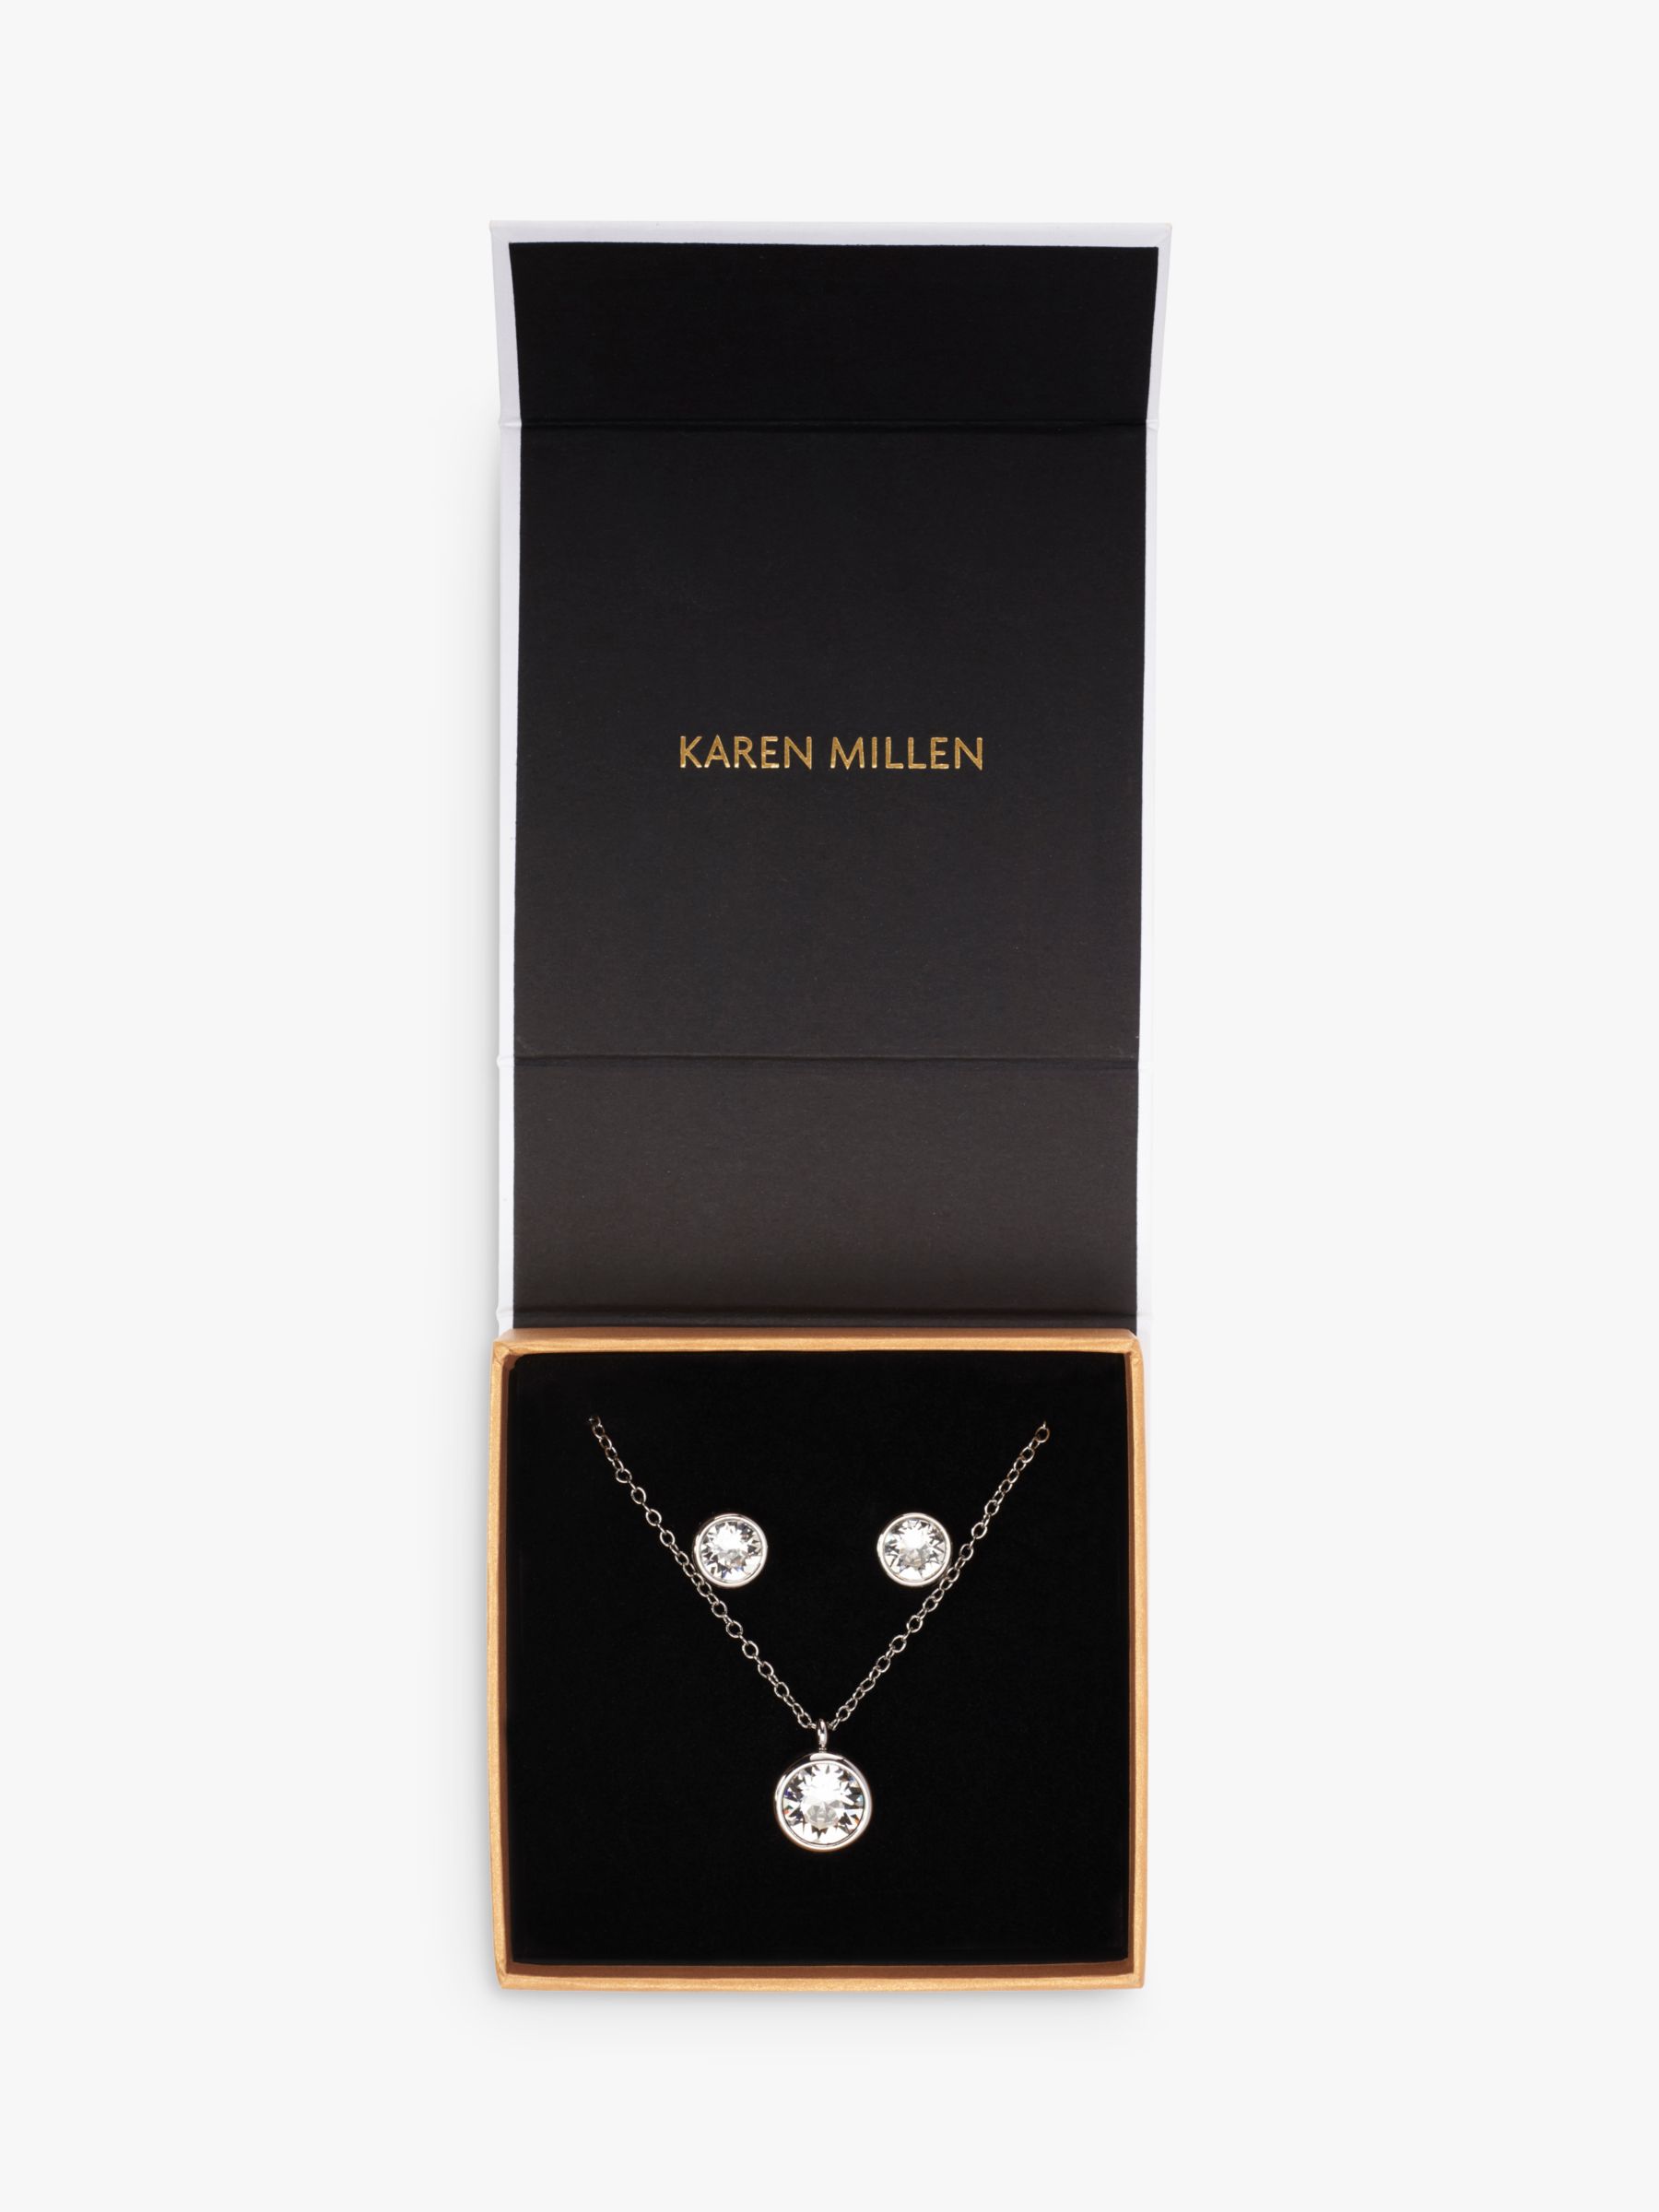 Karen Millen Swarovski Crystal Dot Necklace and Stud Earrings Gift Set, Silver